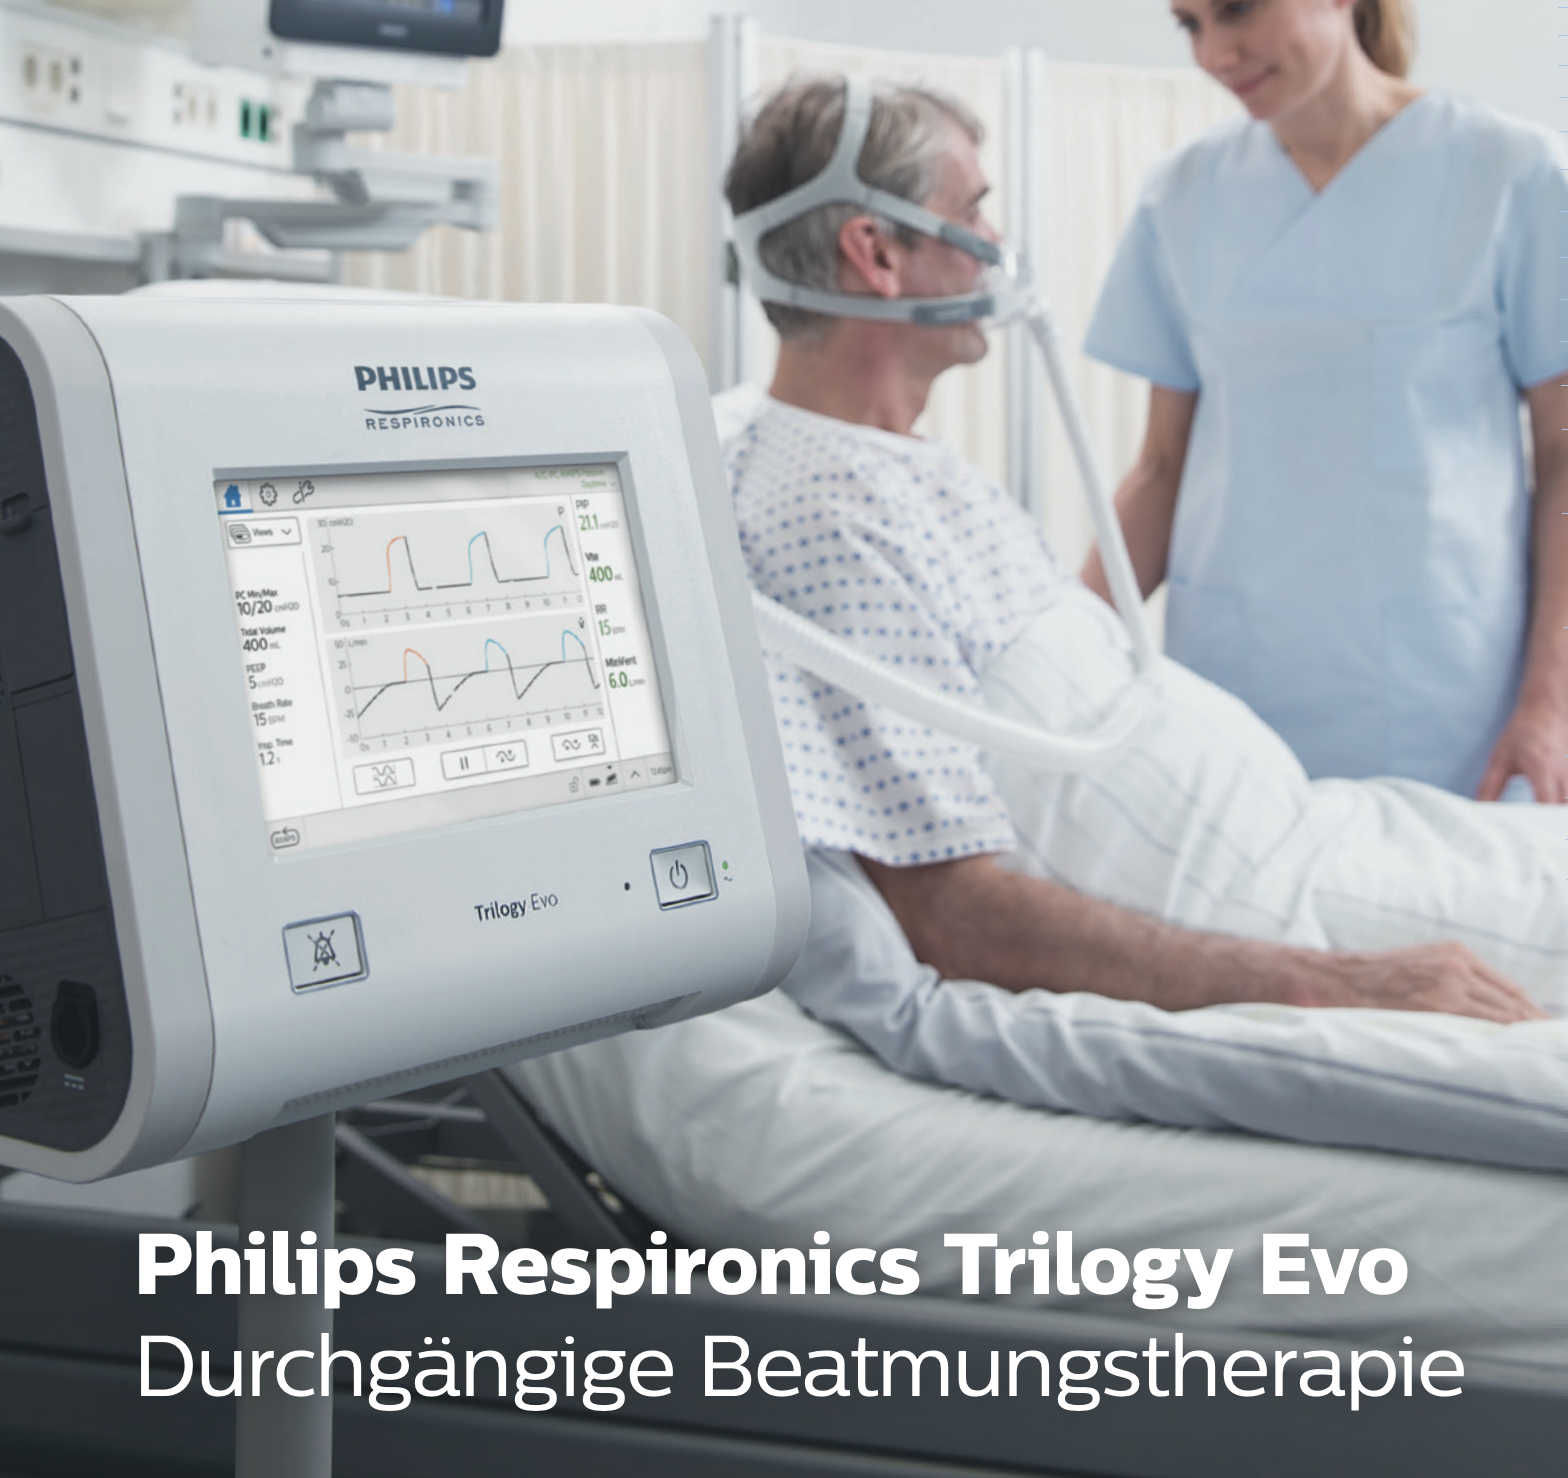 trilogy evo life support ventilators